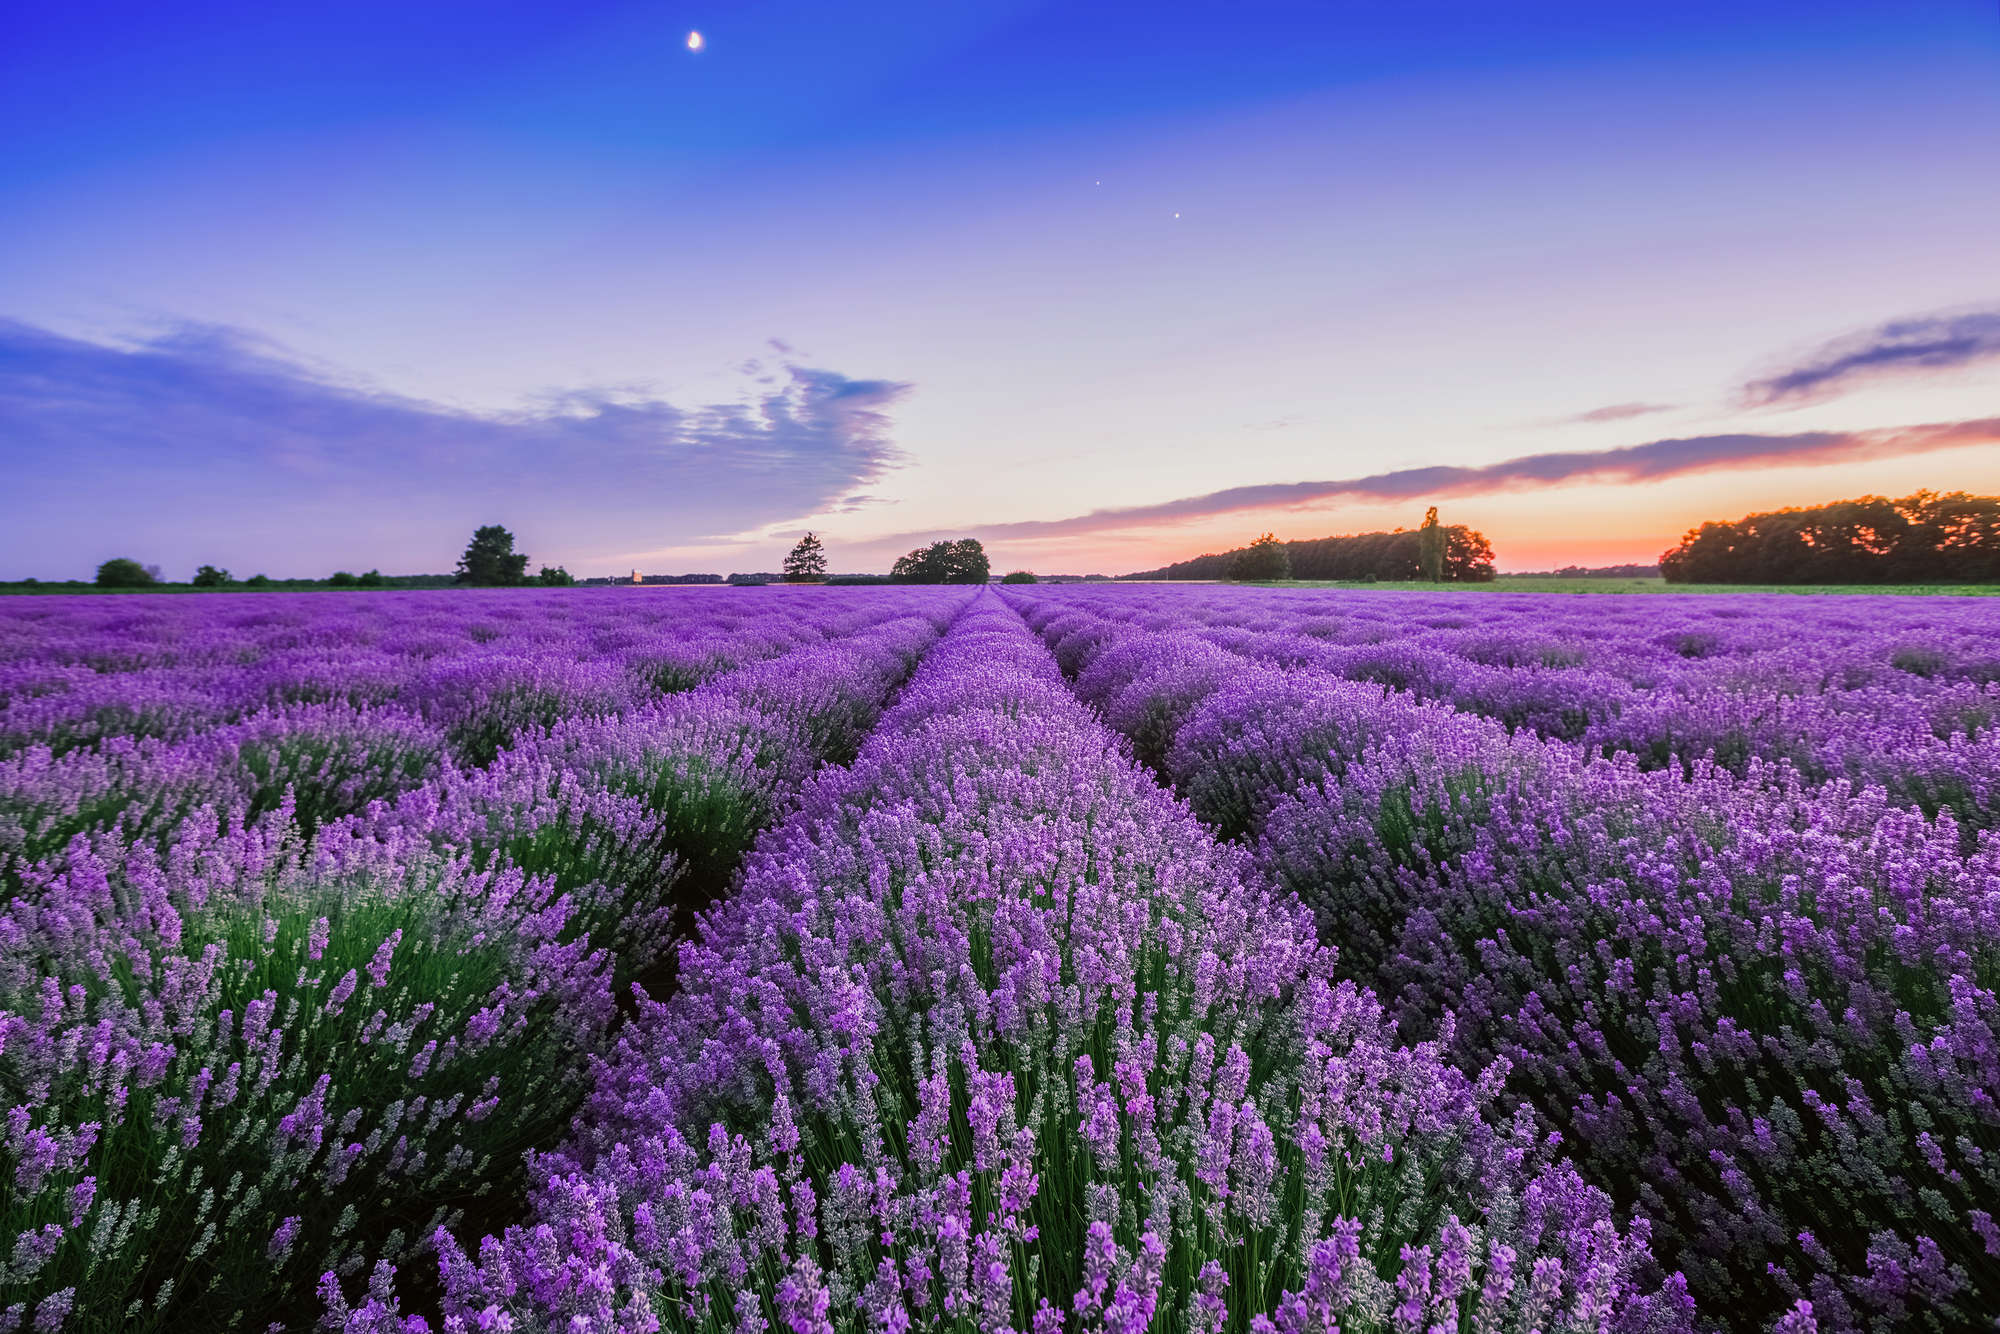             Plants mural lavender meadow on matt smooth fleece
        